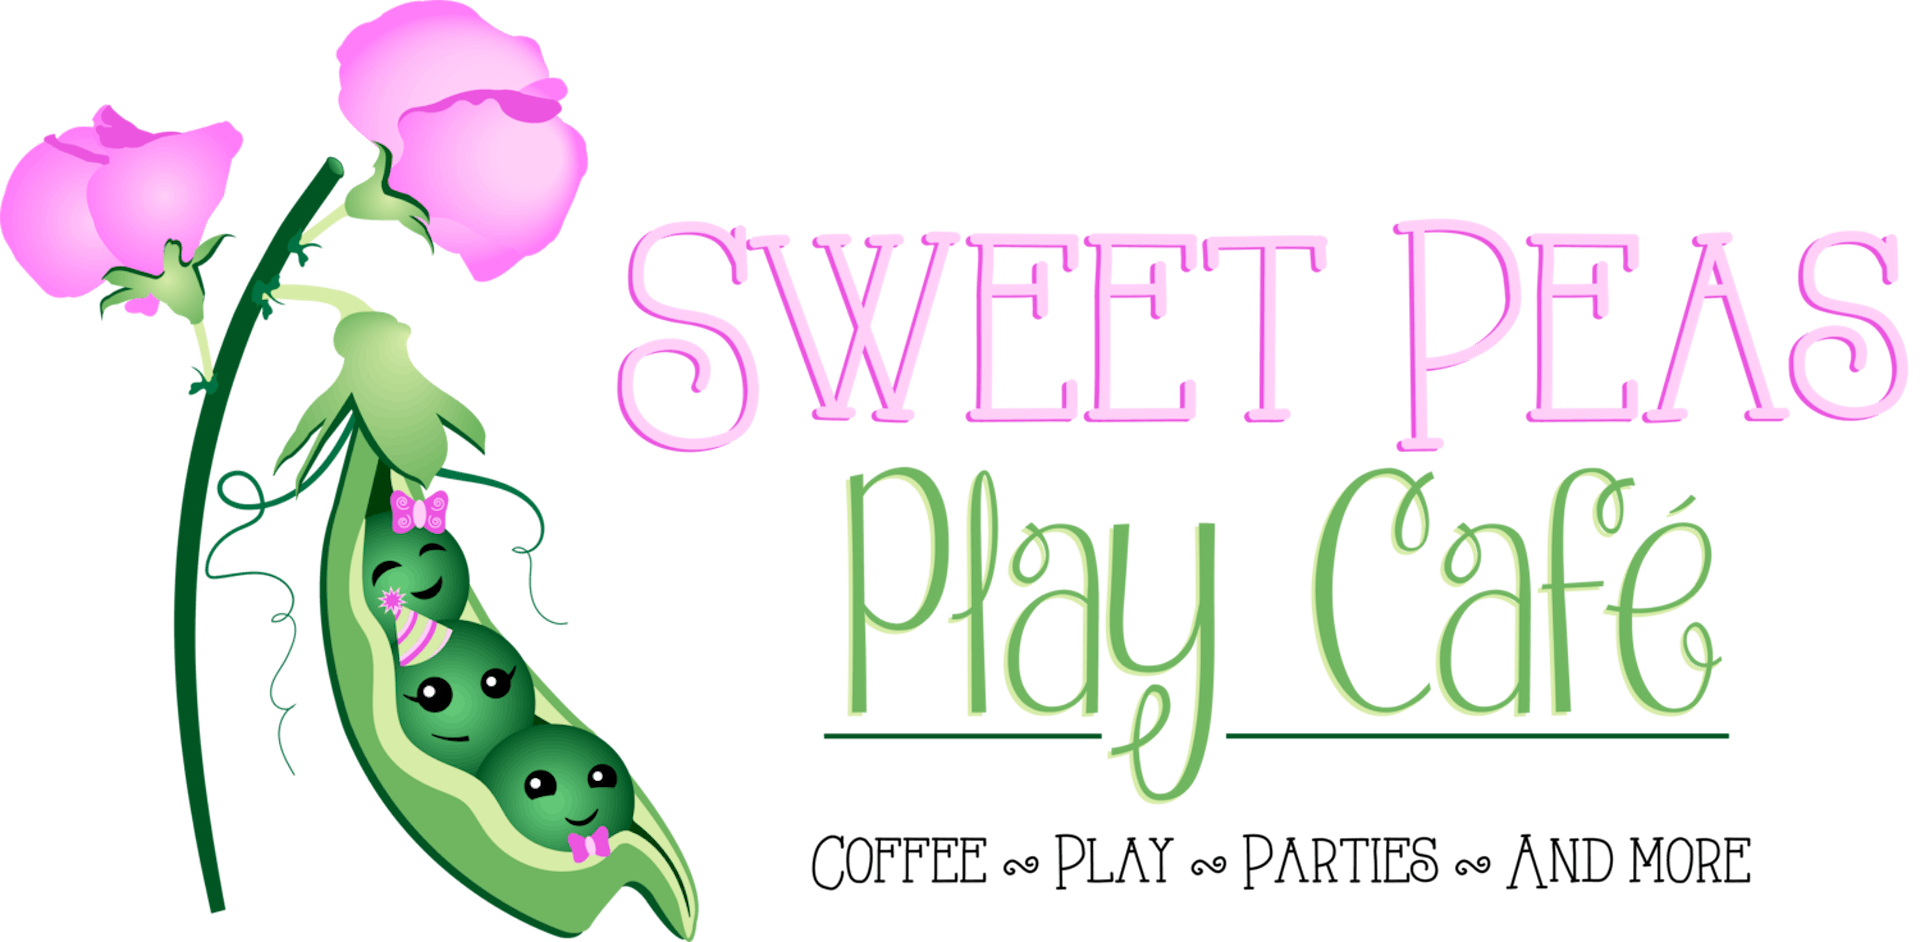 Sweet Peas Play Cafe